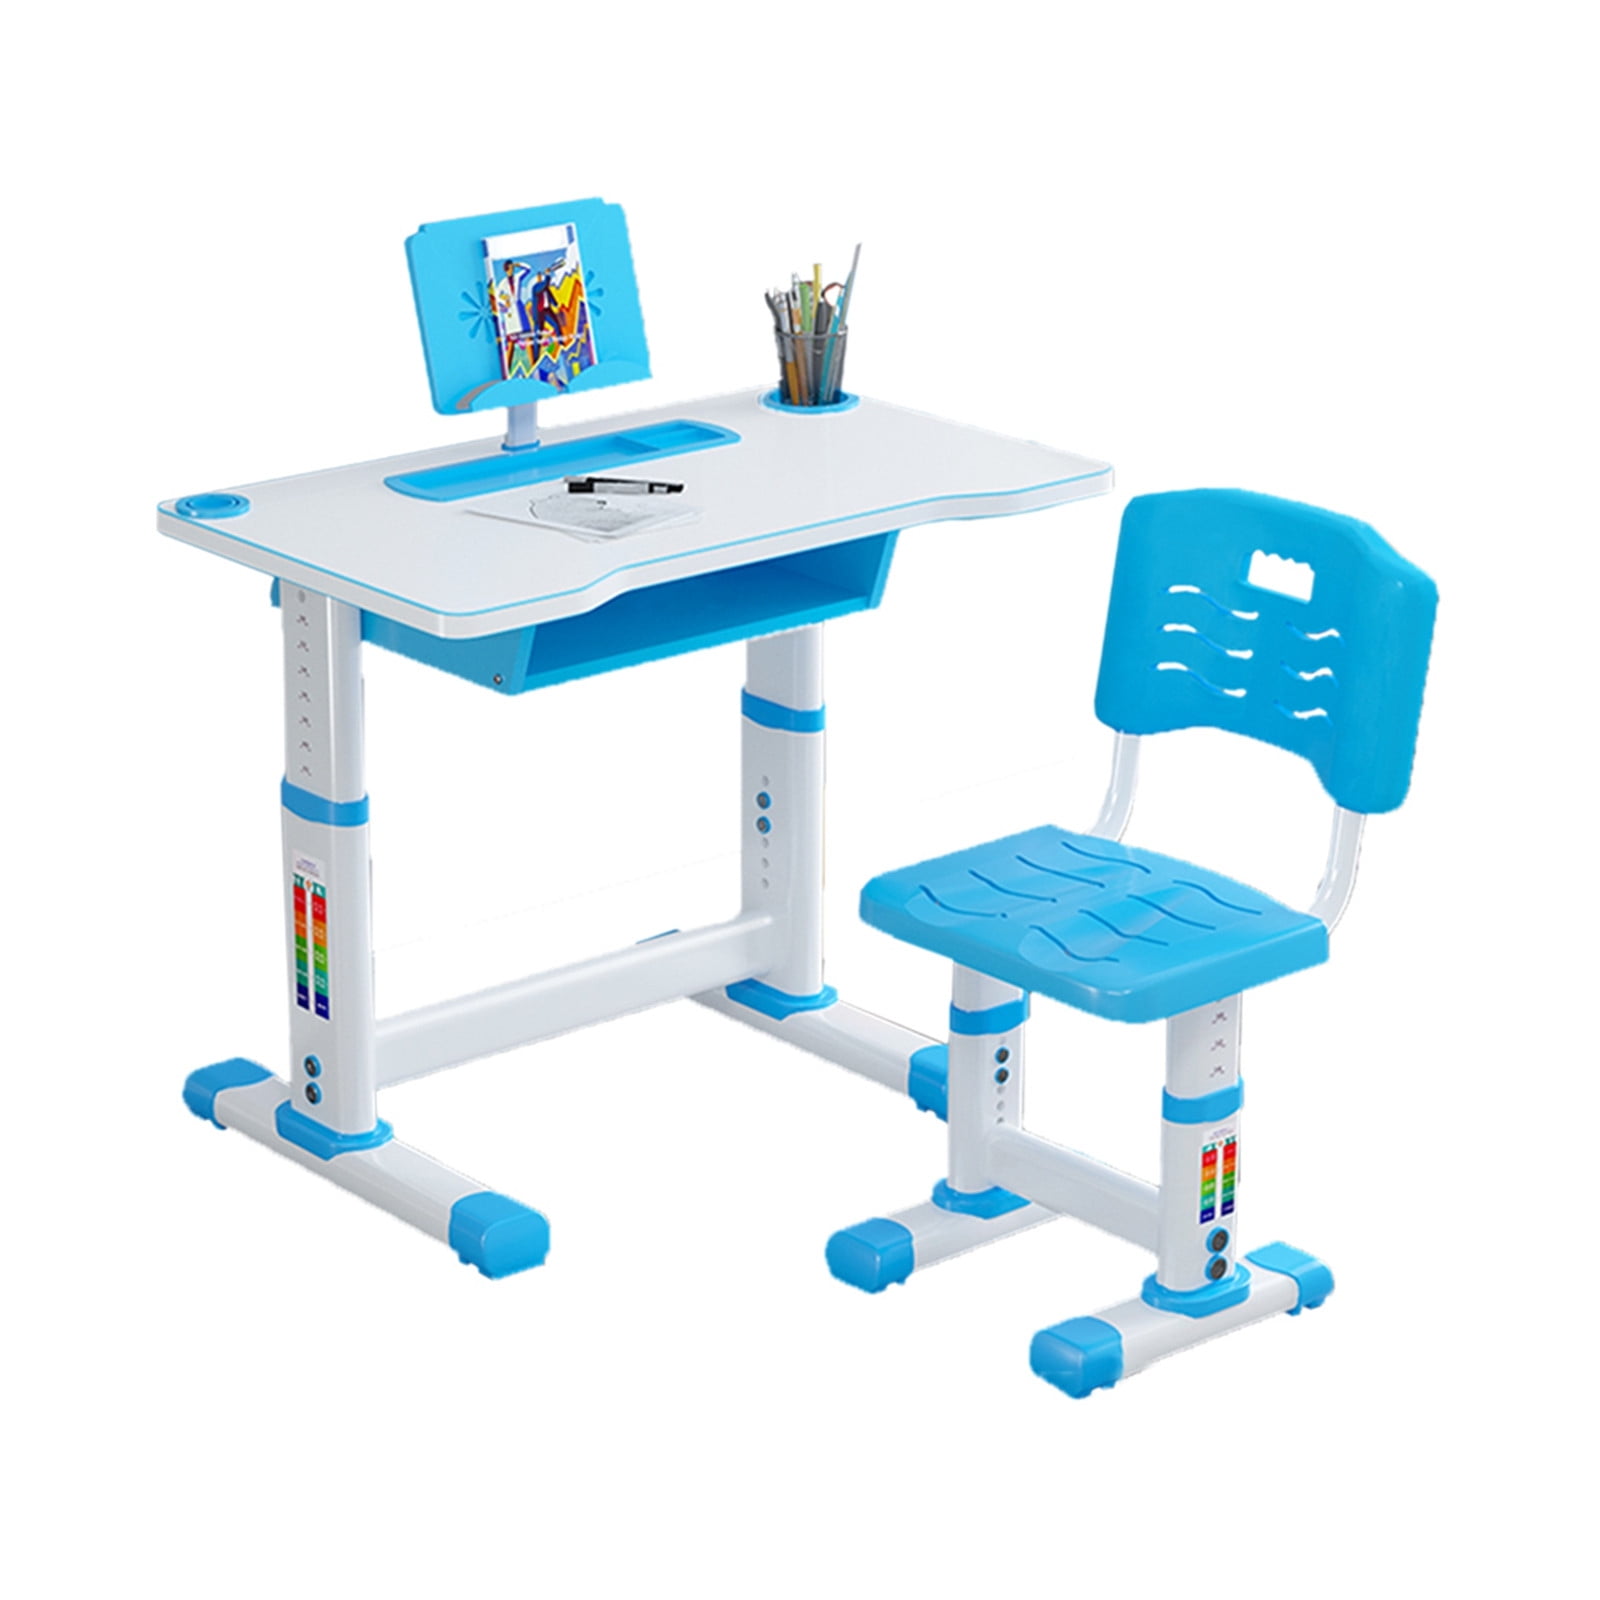 664 x 474 x 540-760 mm FD FUN DESK Piccolino II Blue School Desk Height-Adjustable Childrens Desk with Chair Blue 